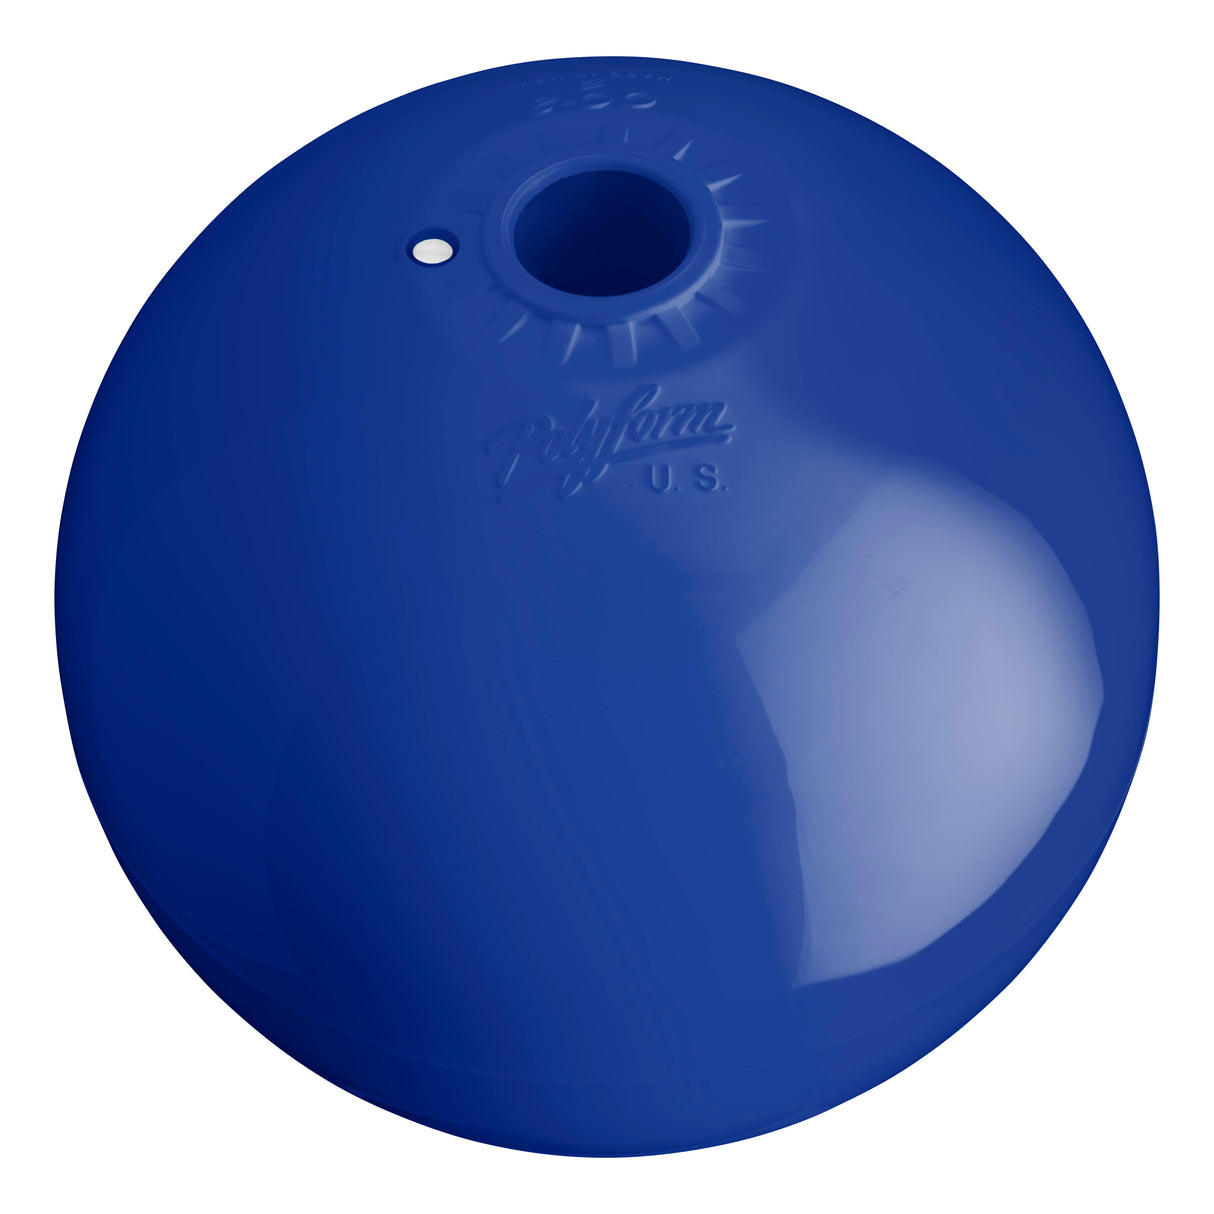 Hole through center mooring and marker buoy, Polyform CC-3 Cobalt Blue angled shot